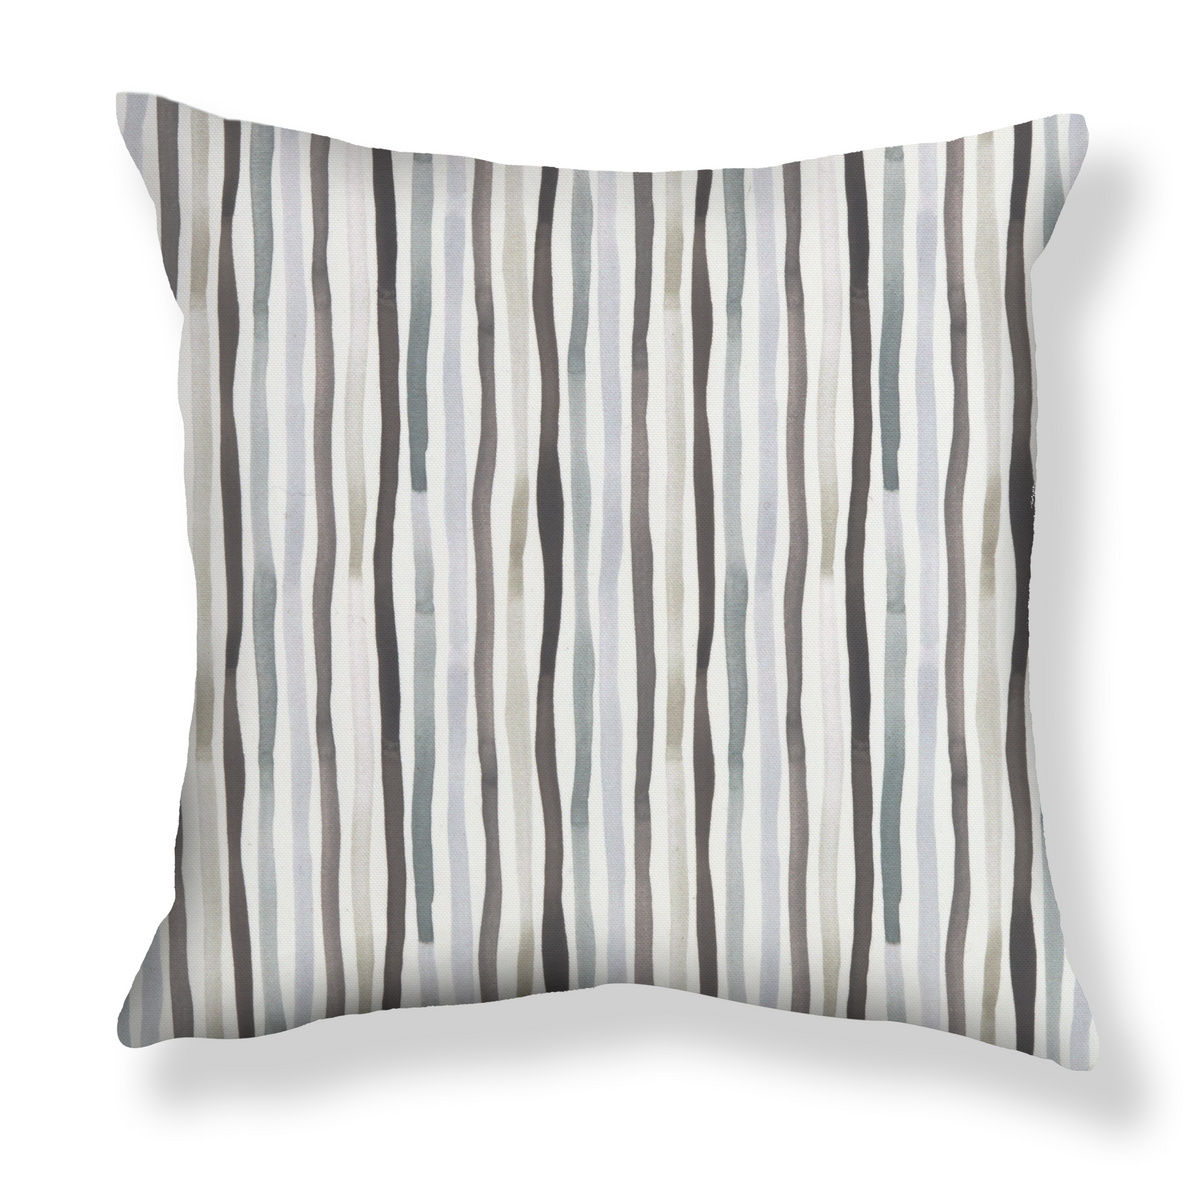 Garden Stripe Pillow in Gray / Blue